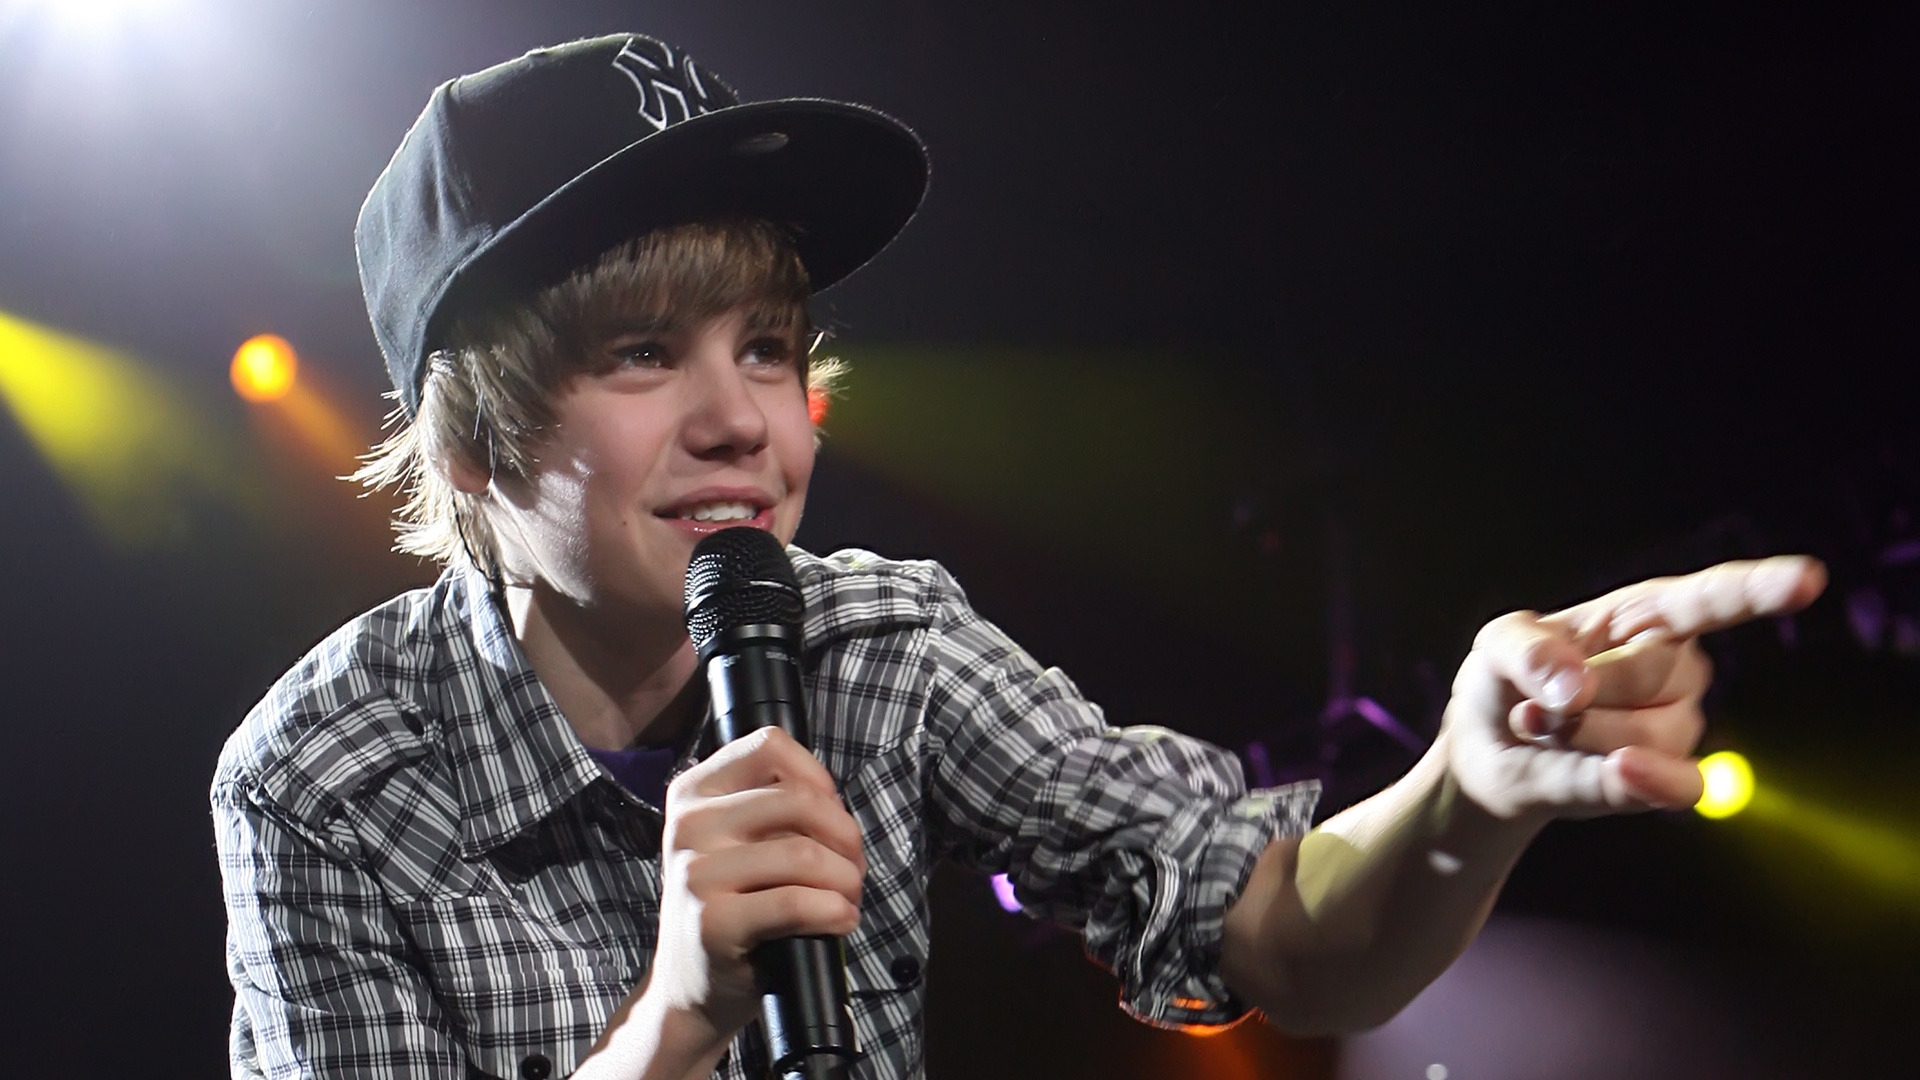 Justin Bieber Singing for 1920 x 1080 HDTV 1080p resolution